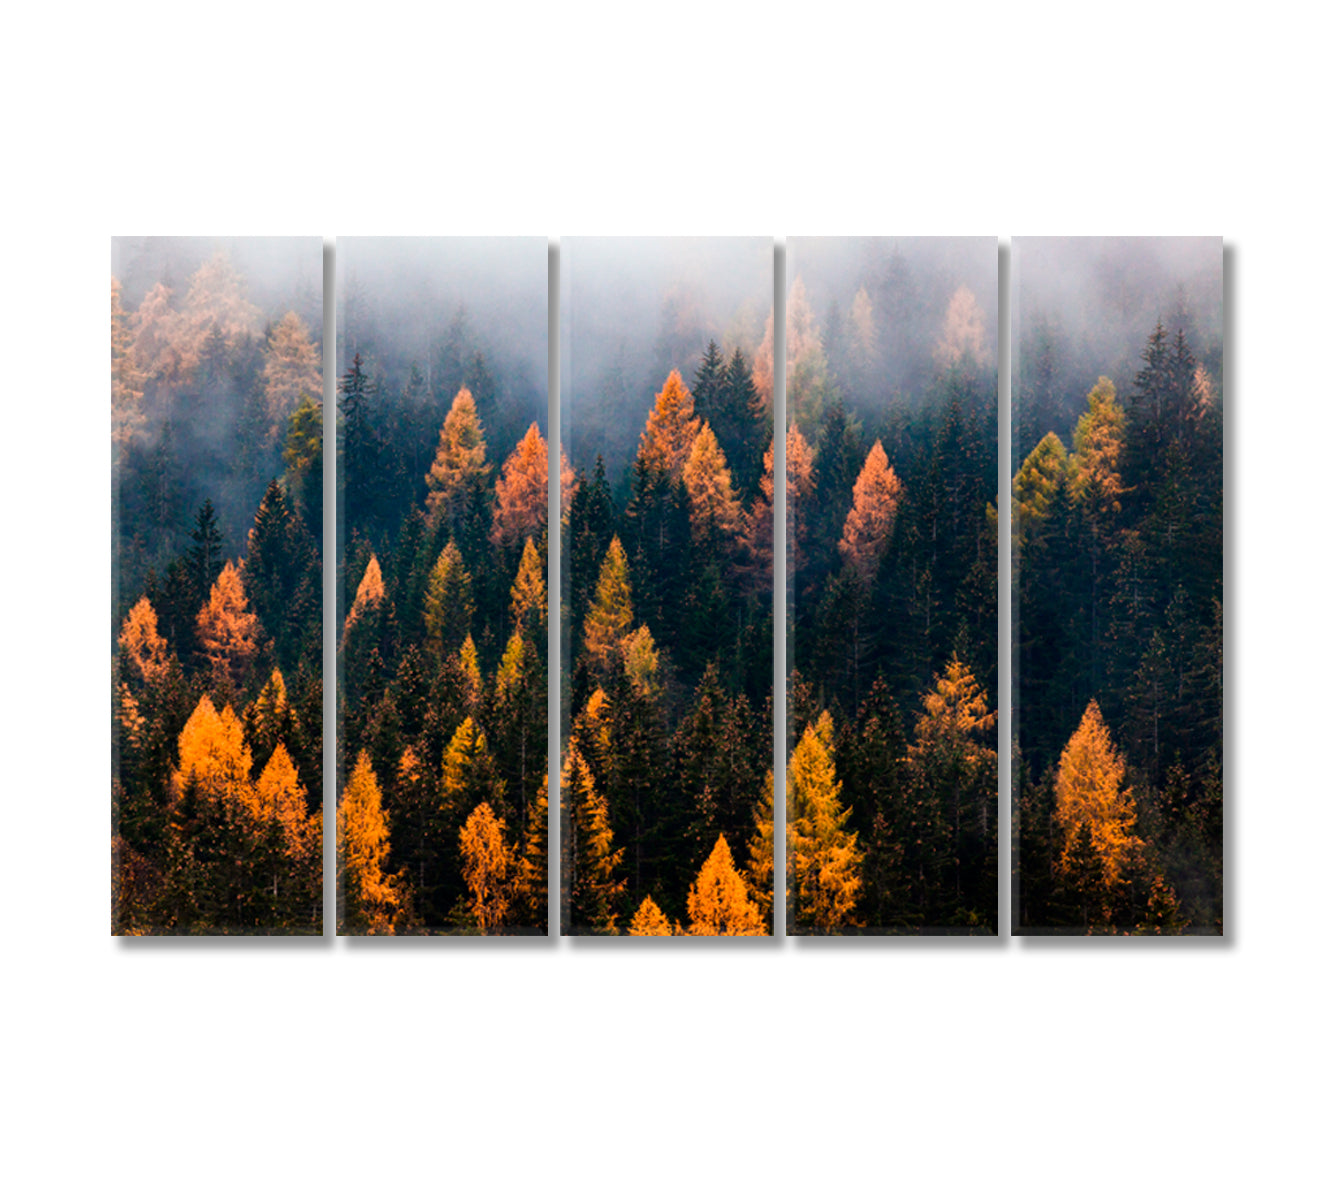 Autumn Forest in Fog Canvas Print-Canvas Print-CetArt-5 Panels-36x24 inches-CetArt